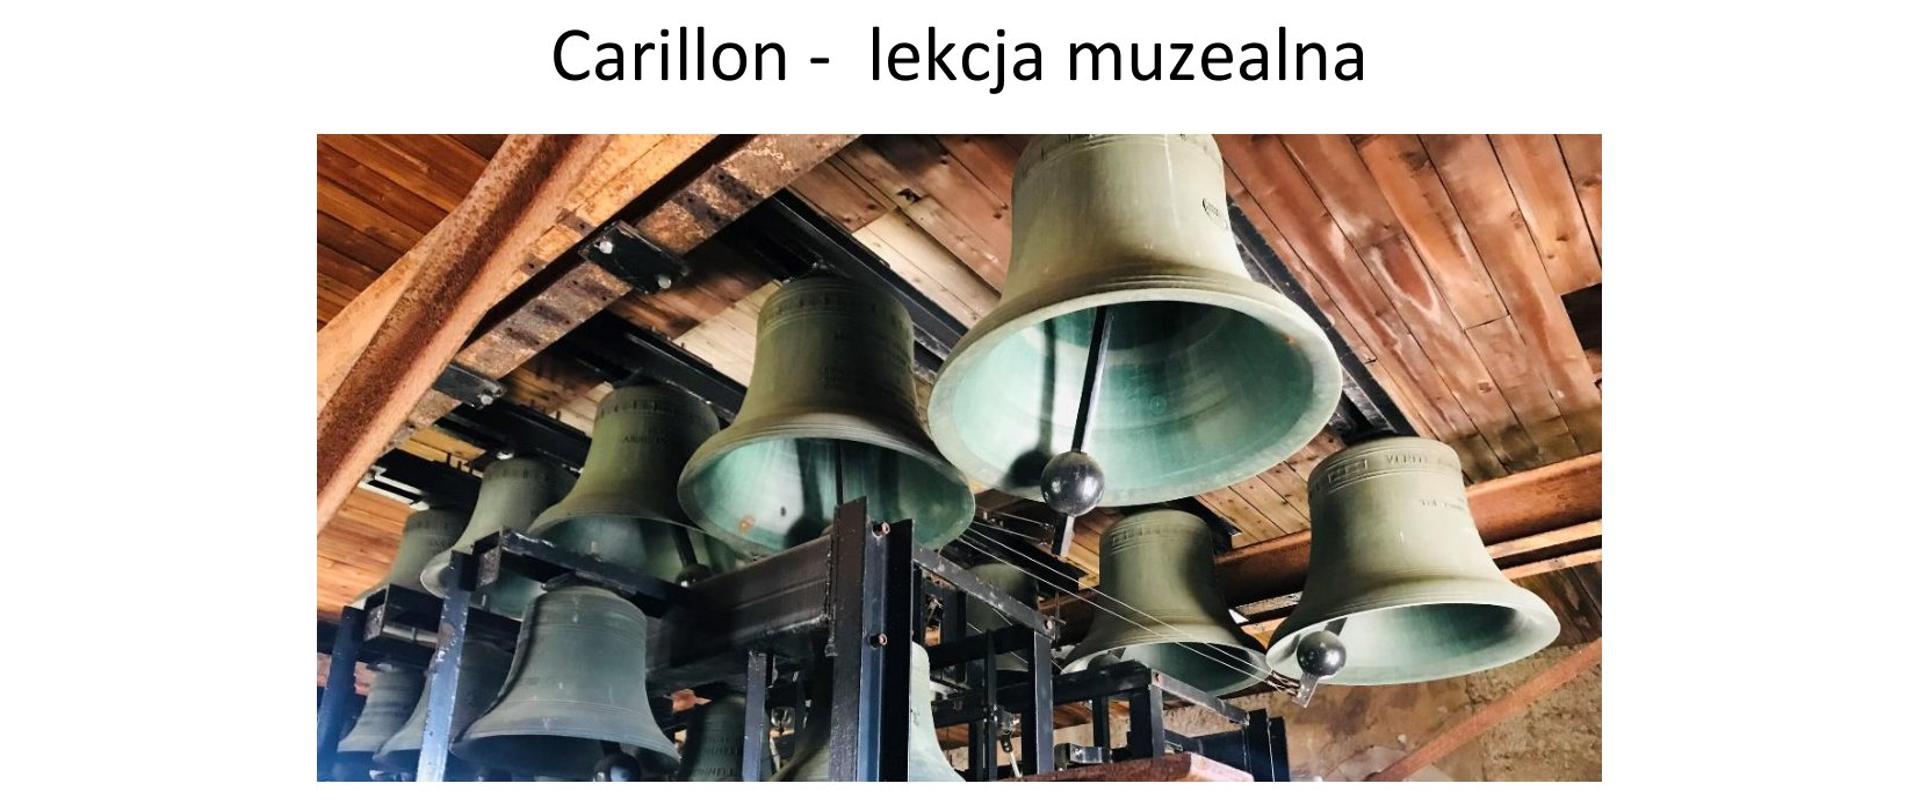 Carillon - lekcja muzealna